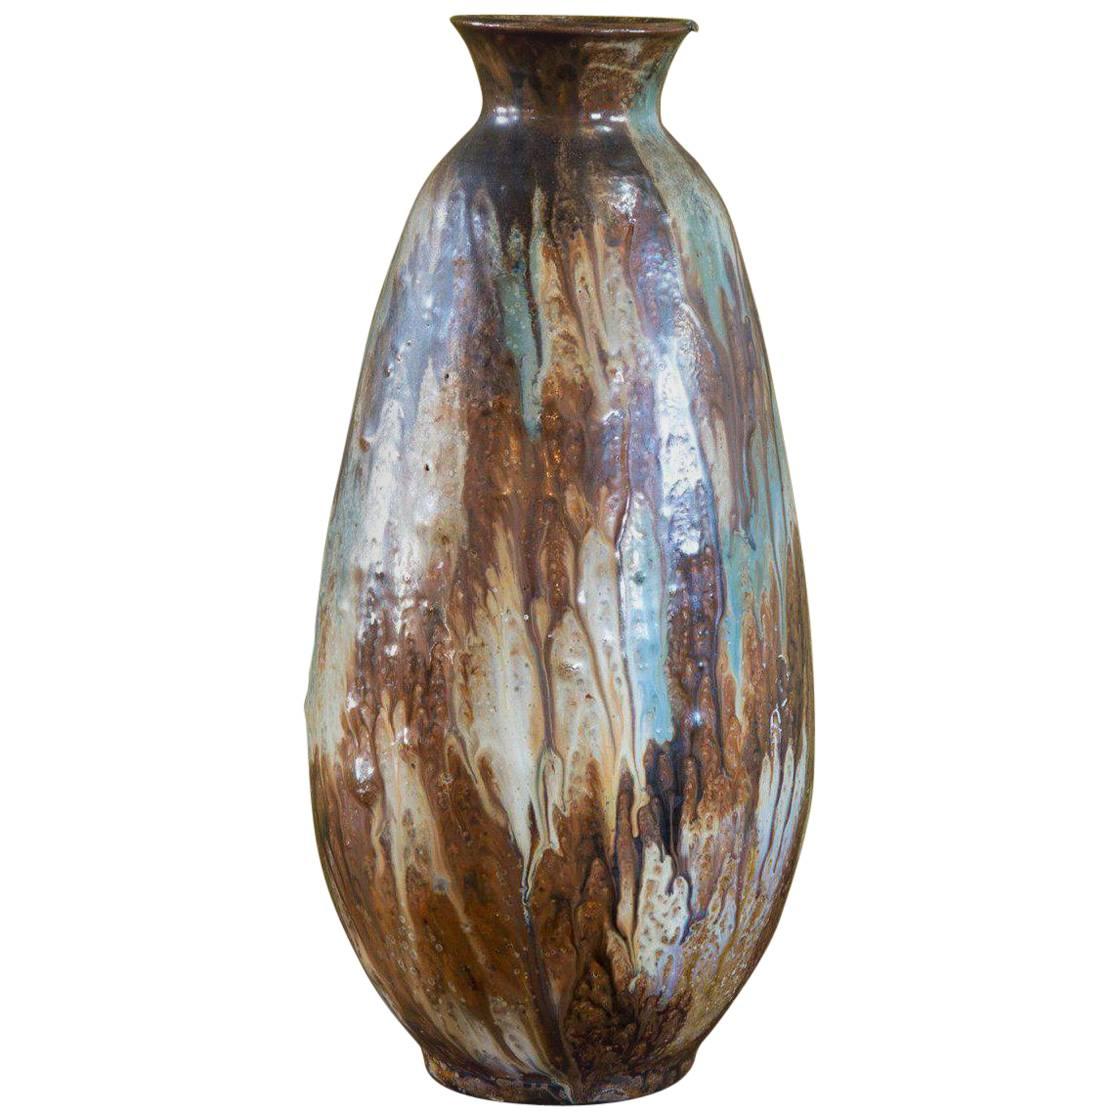 Handmade Glazed Pottery Art Vase by Belgian Potter Edgard Aubry, circa 1920s